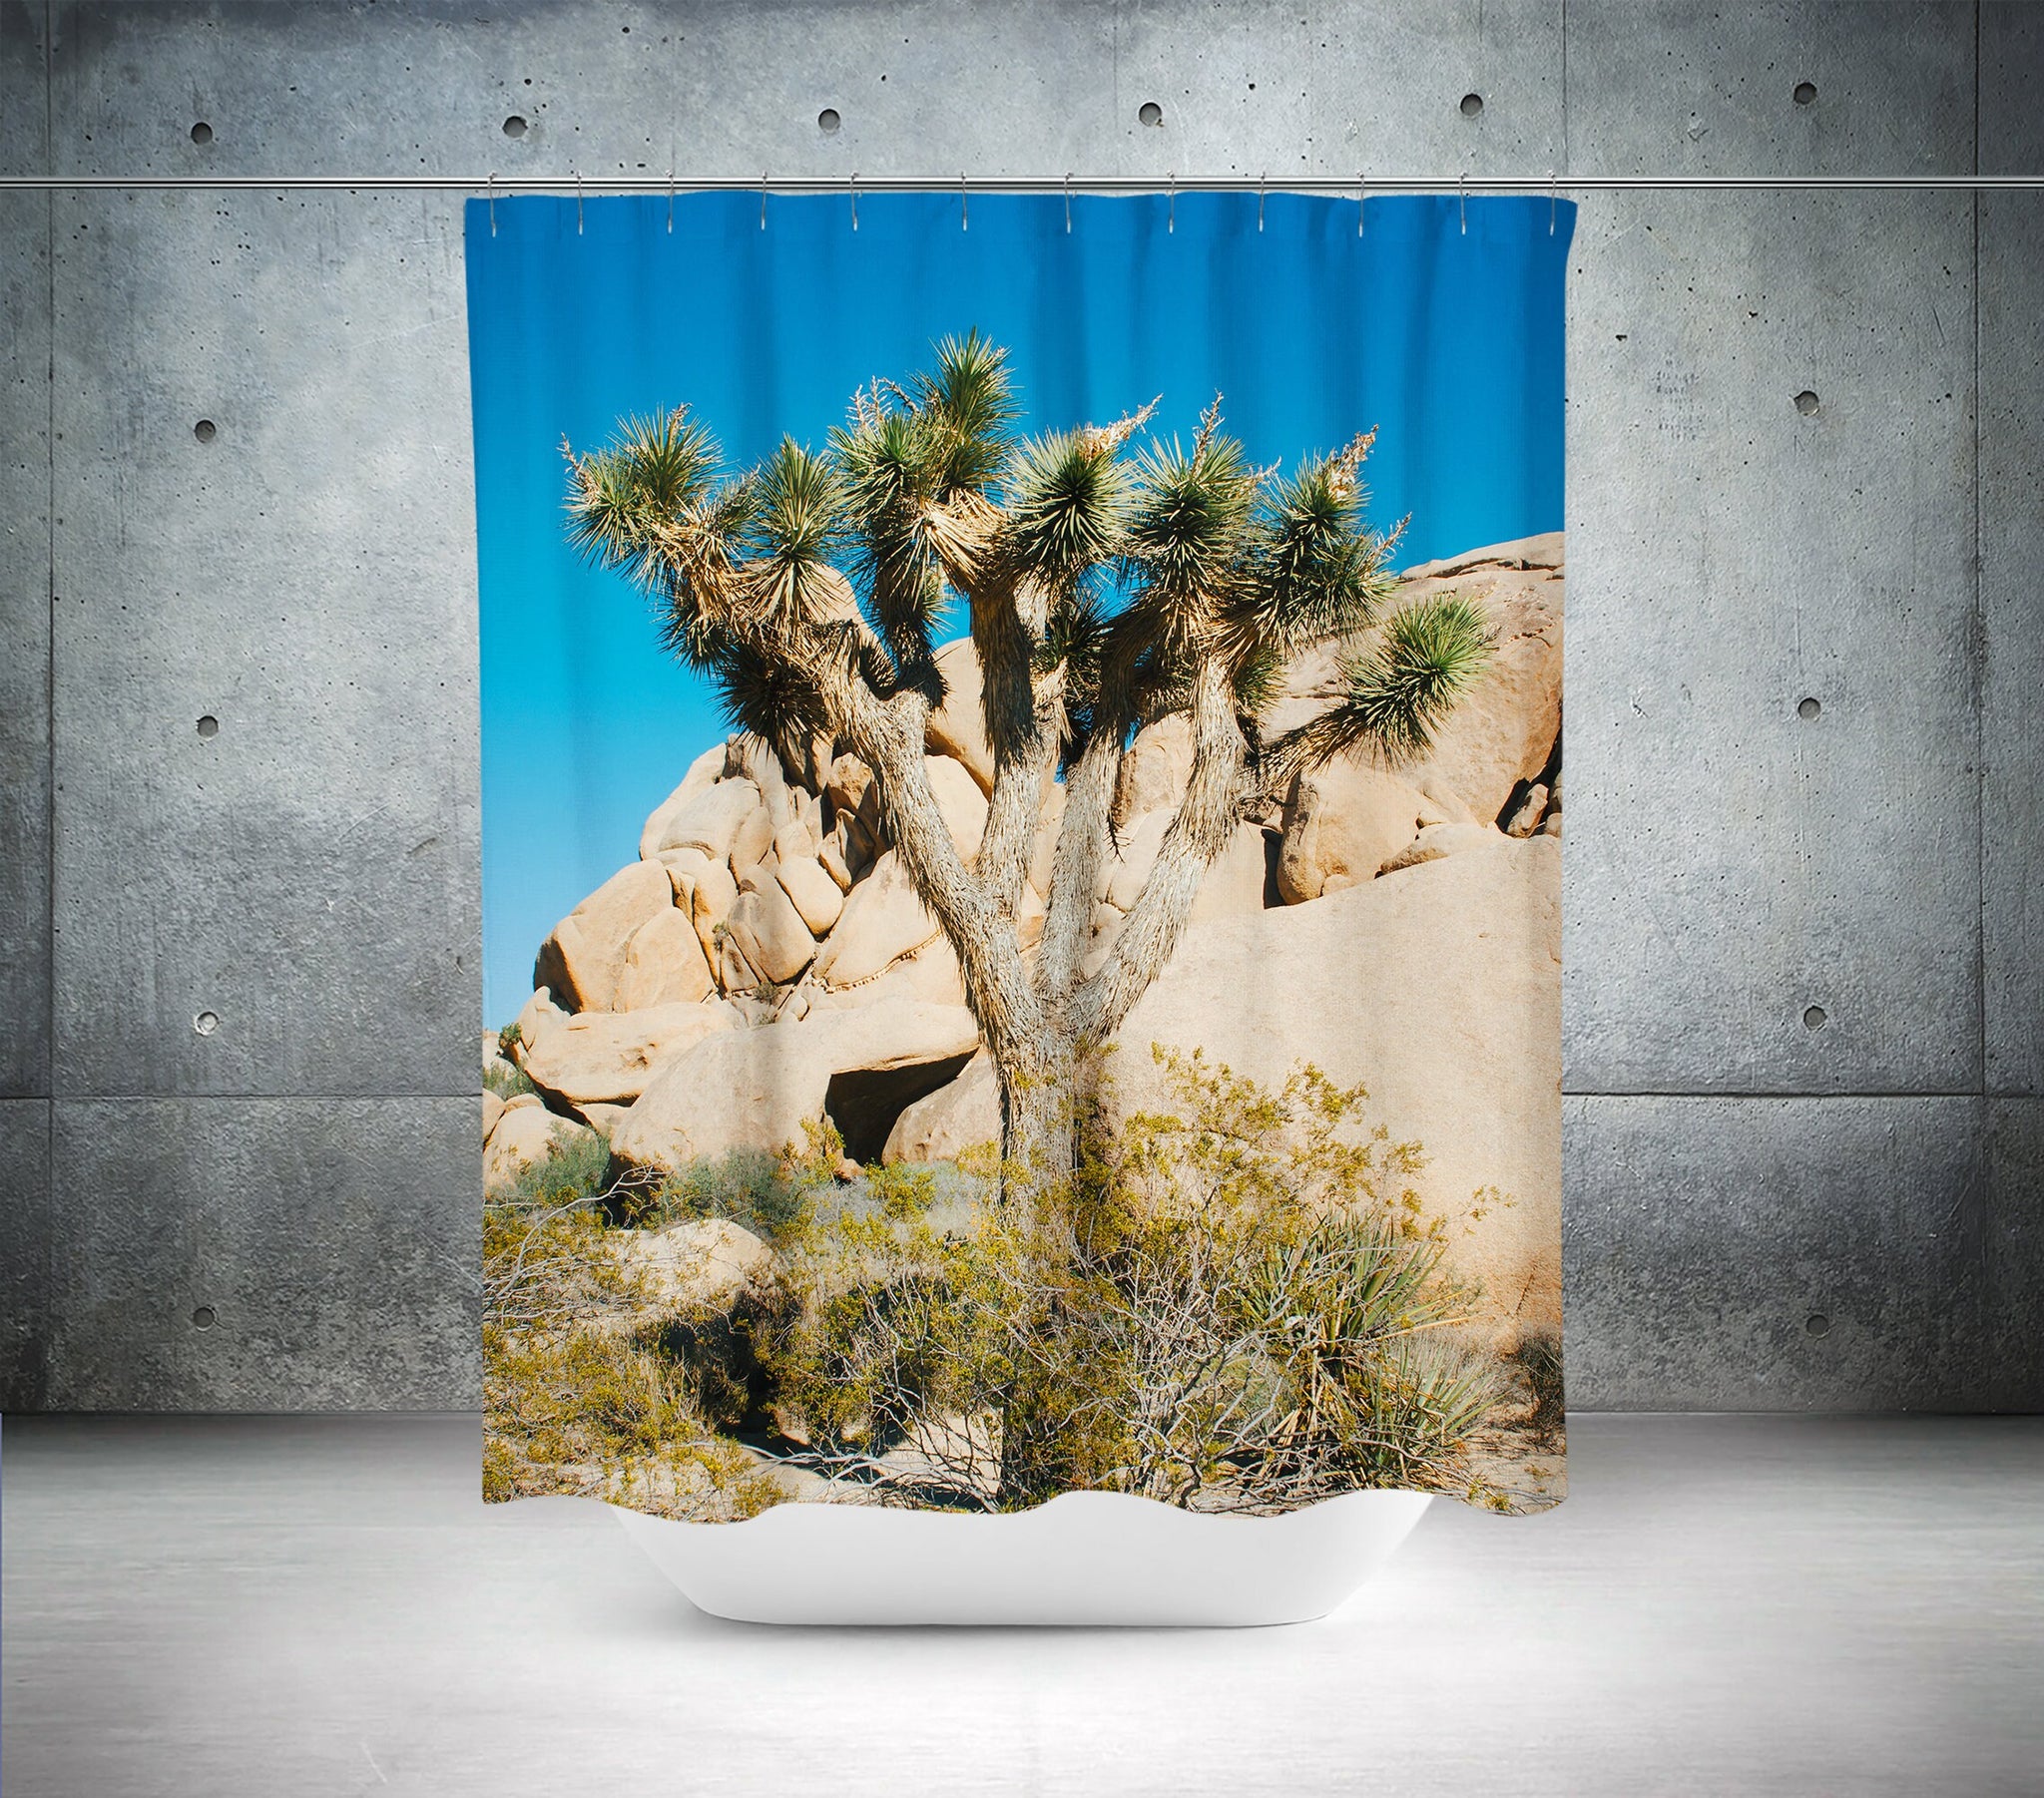 Joshua Tree Cactus Shower Curtain 71x74 inch Desert Decor -